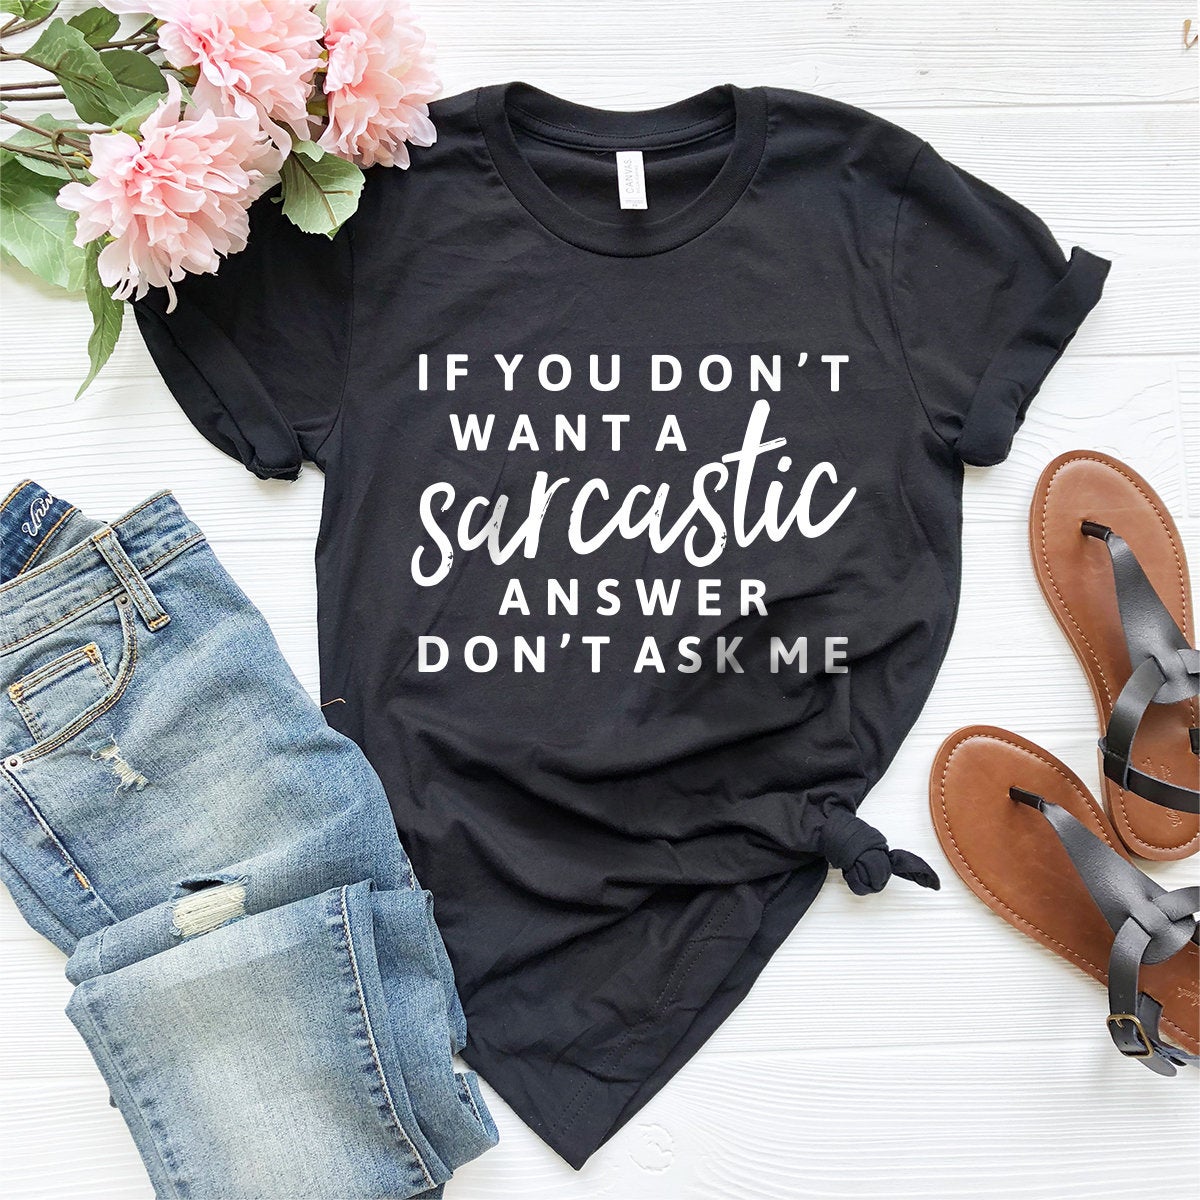 Sarcastic Shirt, Sarcasm T-Shirt, Funny Sarcastic Tee, Sassy Shirt, Sarcastic Gifts, If You Don't Want A Sarcastic Answer Don't Ask Me Shirt - Fastdeliverytees.com